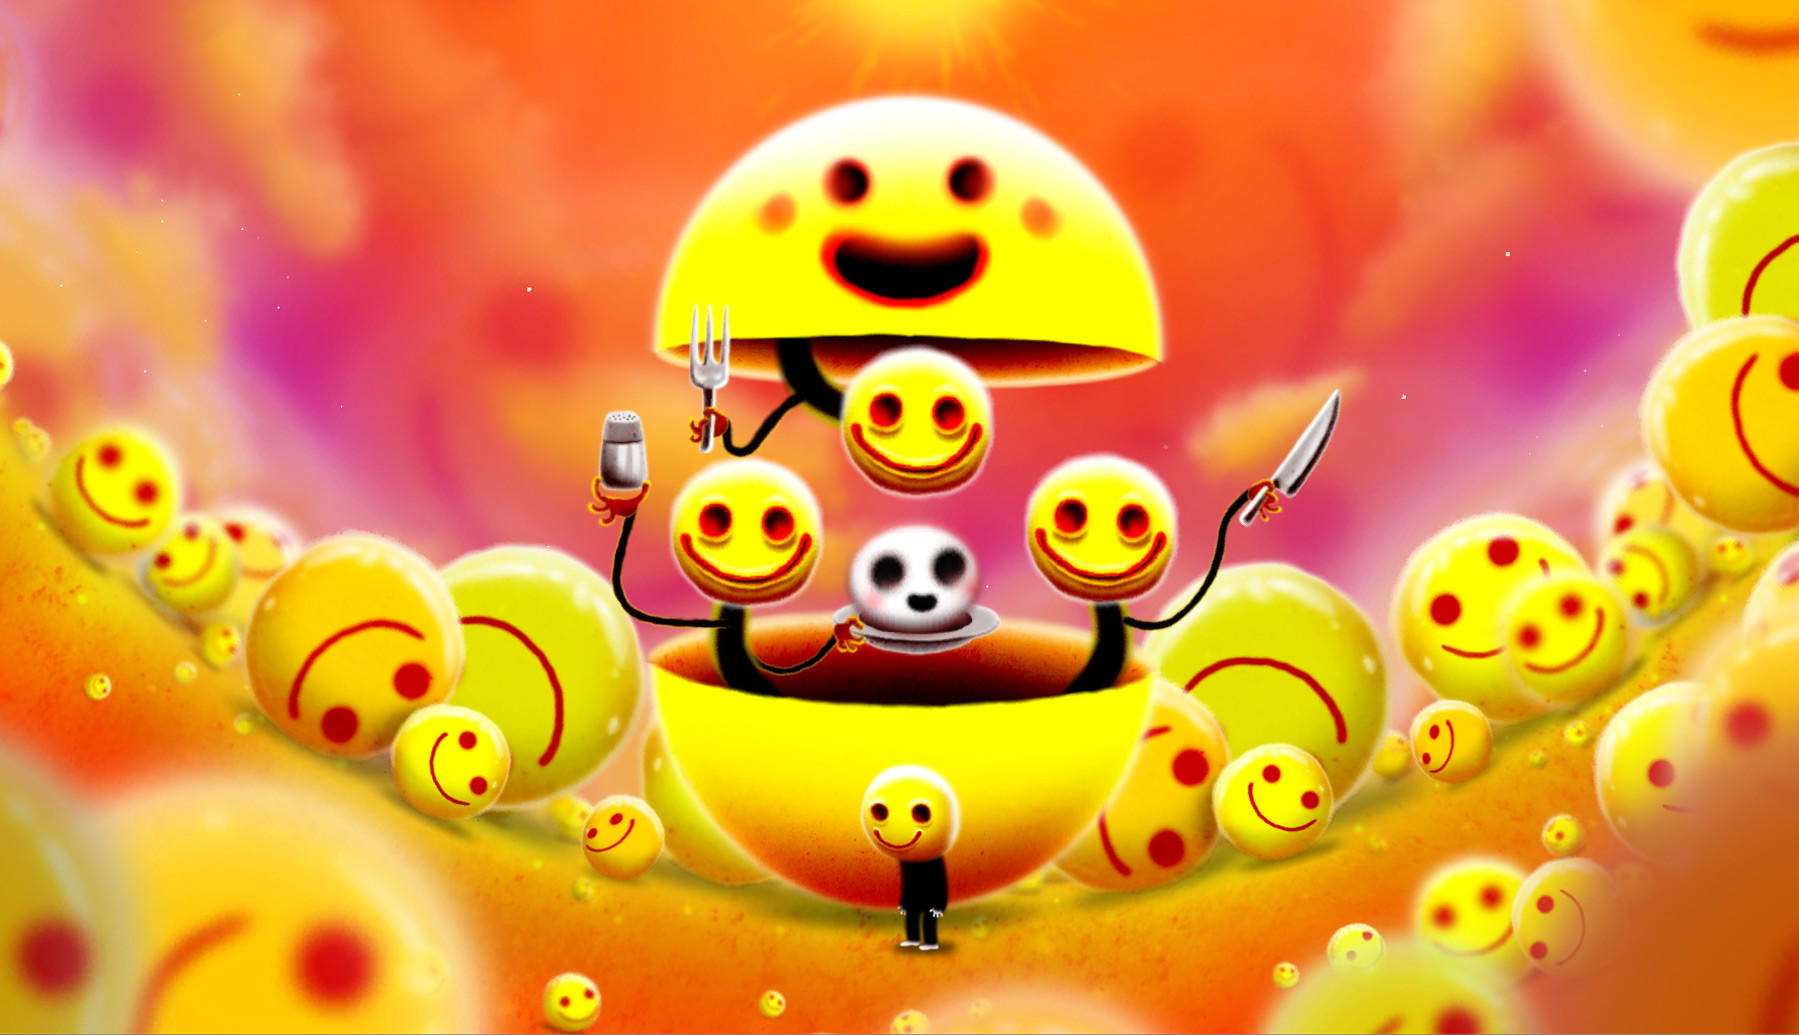 Screenshot 1 of juego feliz 